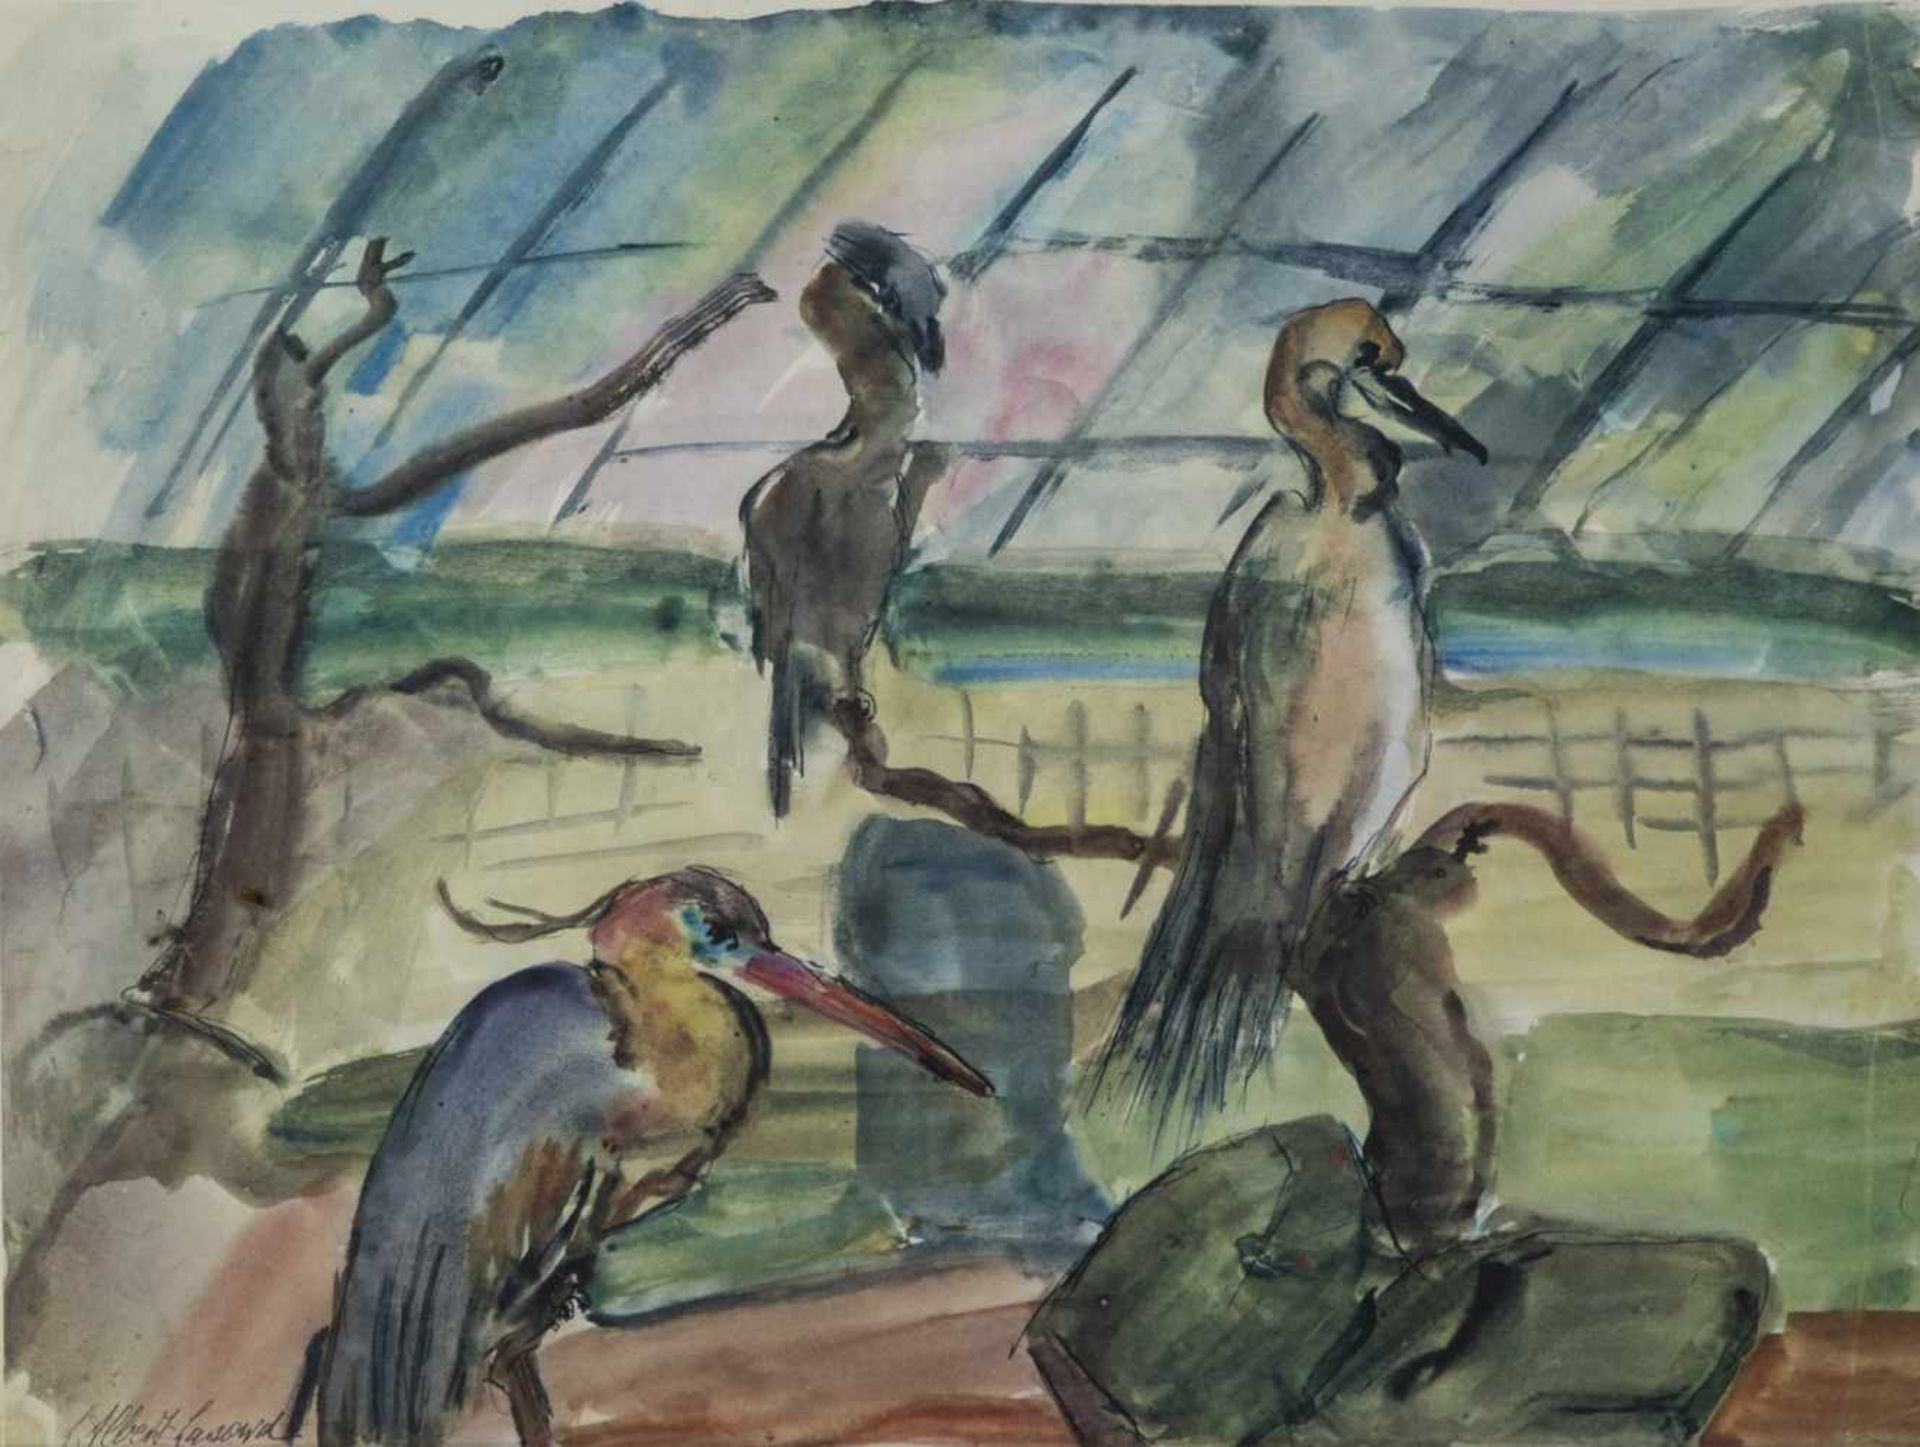 Lou Albert-Lasard. 1885 Metz - 1969 Paris. Aviary with three birds. Mixed media on paper.Signed